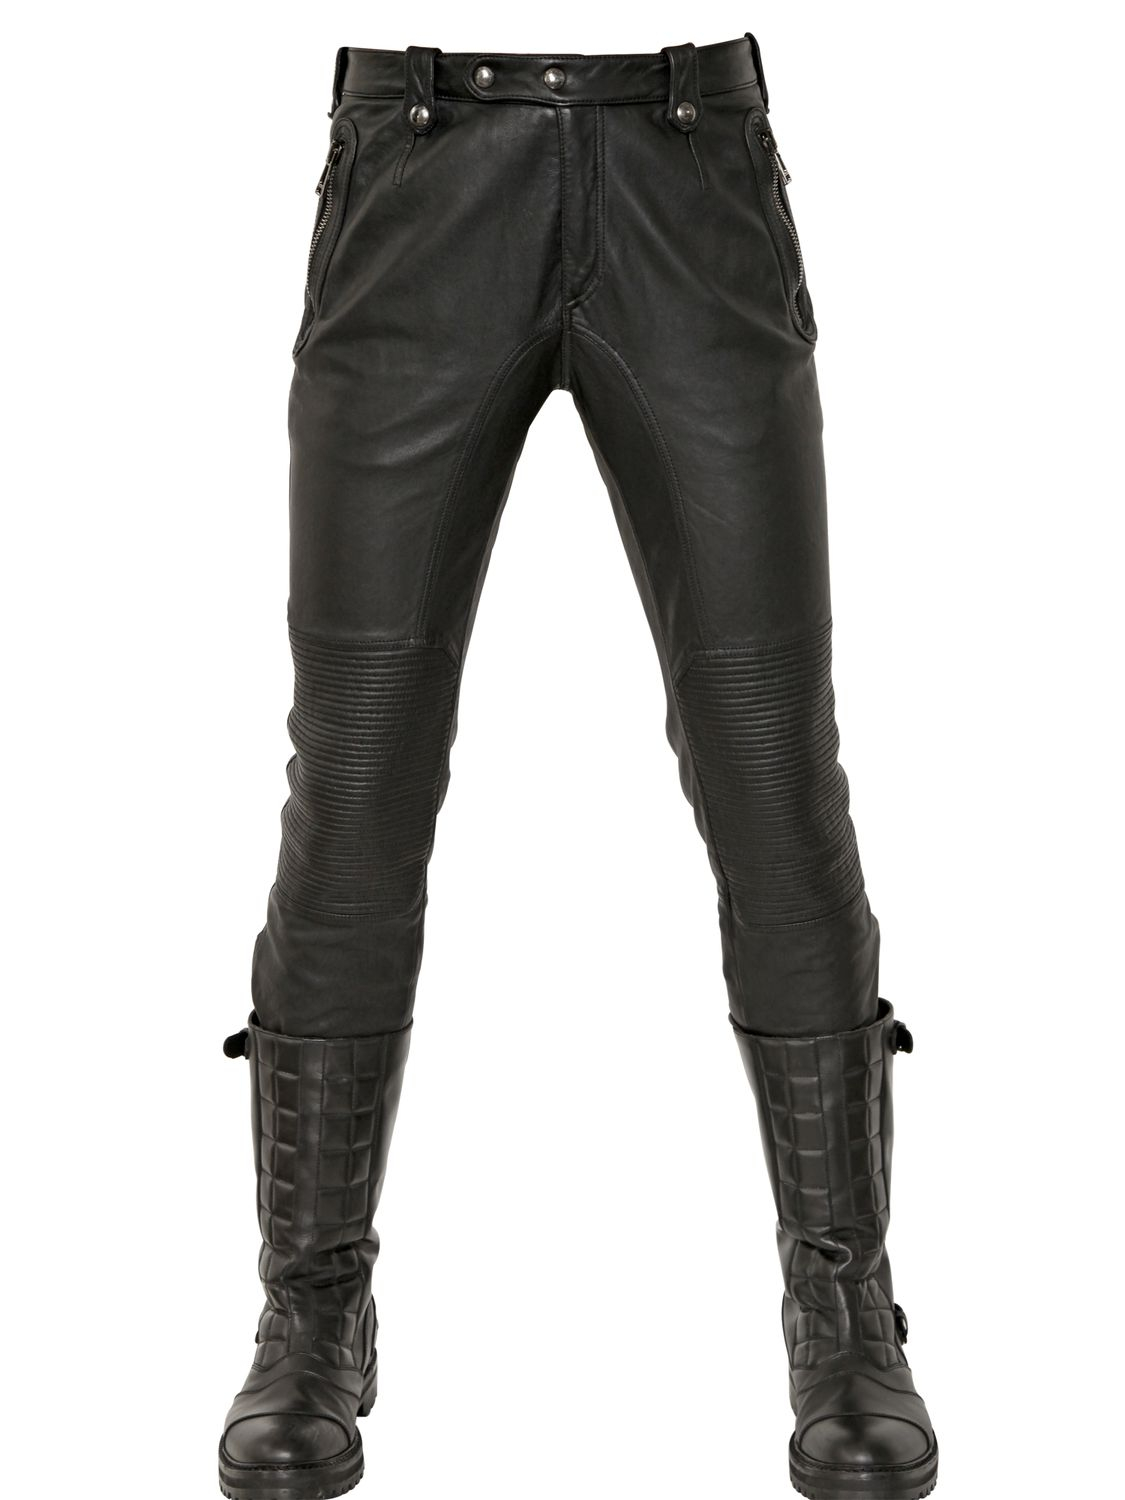 Belstaff 17cm Washed Leather Biker Trousers in Black for Men - Lyst